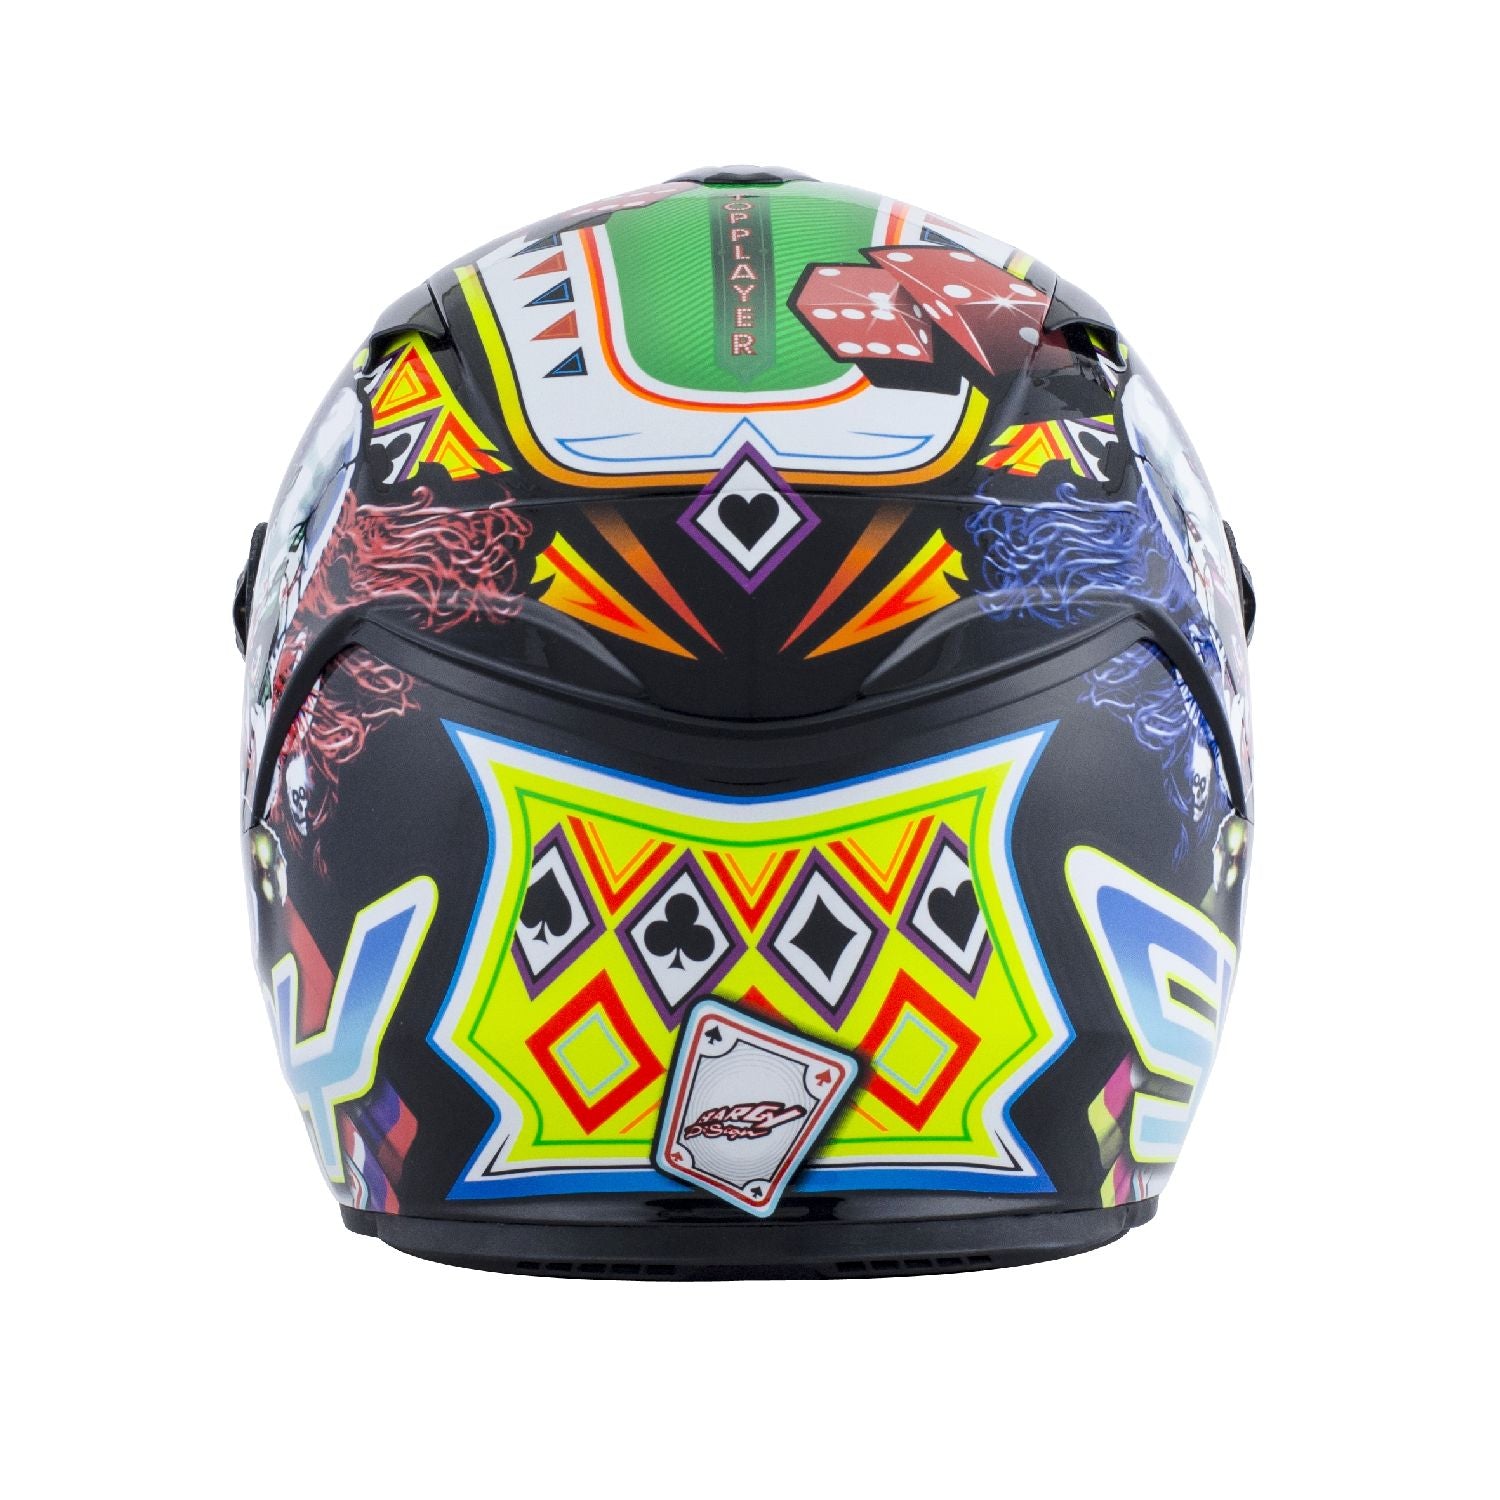 Suomy SR-Sport Top Player Full Face Motorcycle Helmet (XS - 2XL)